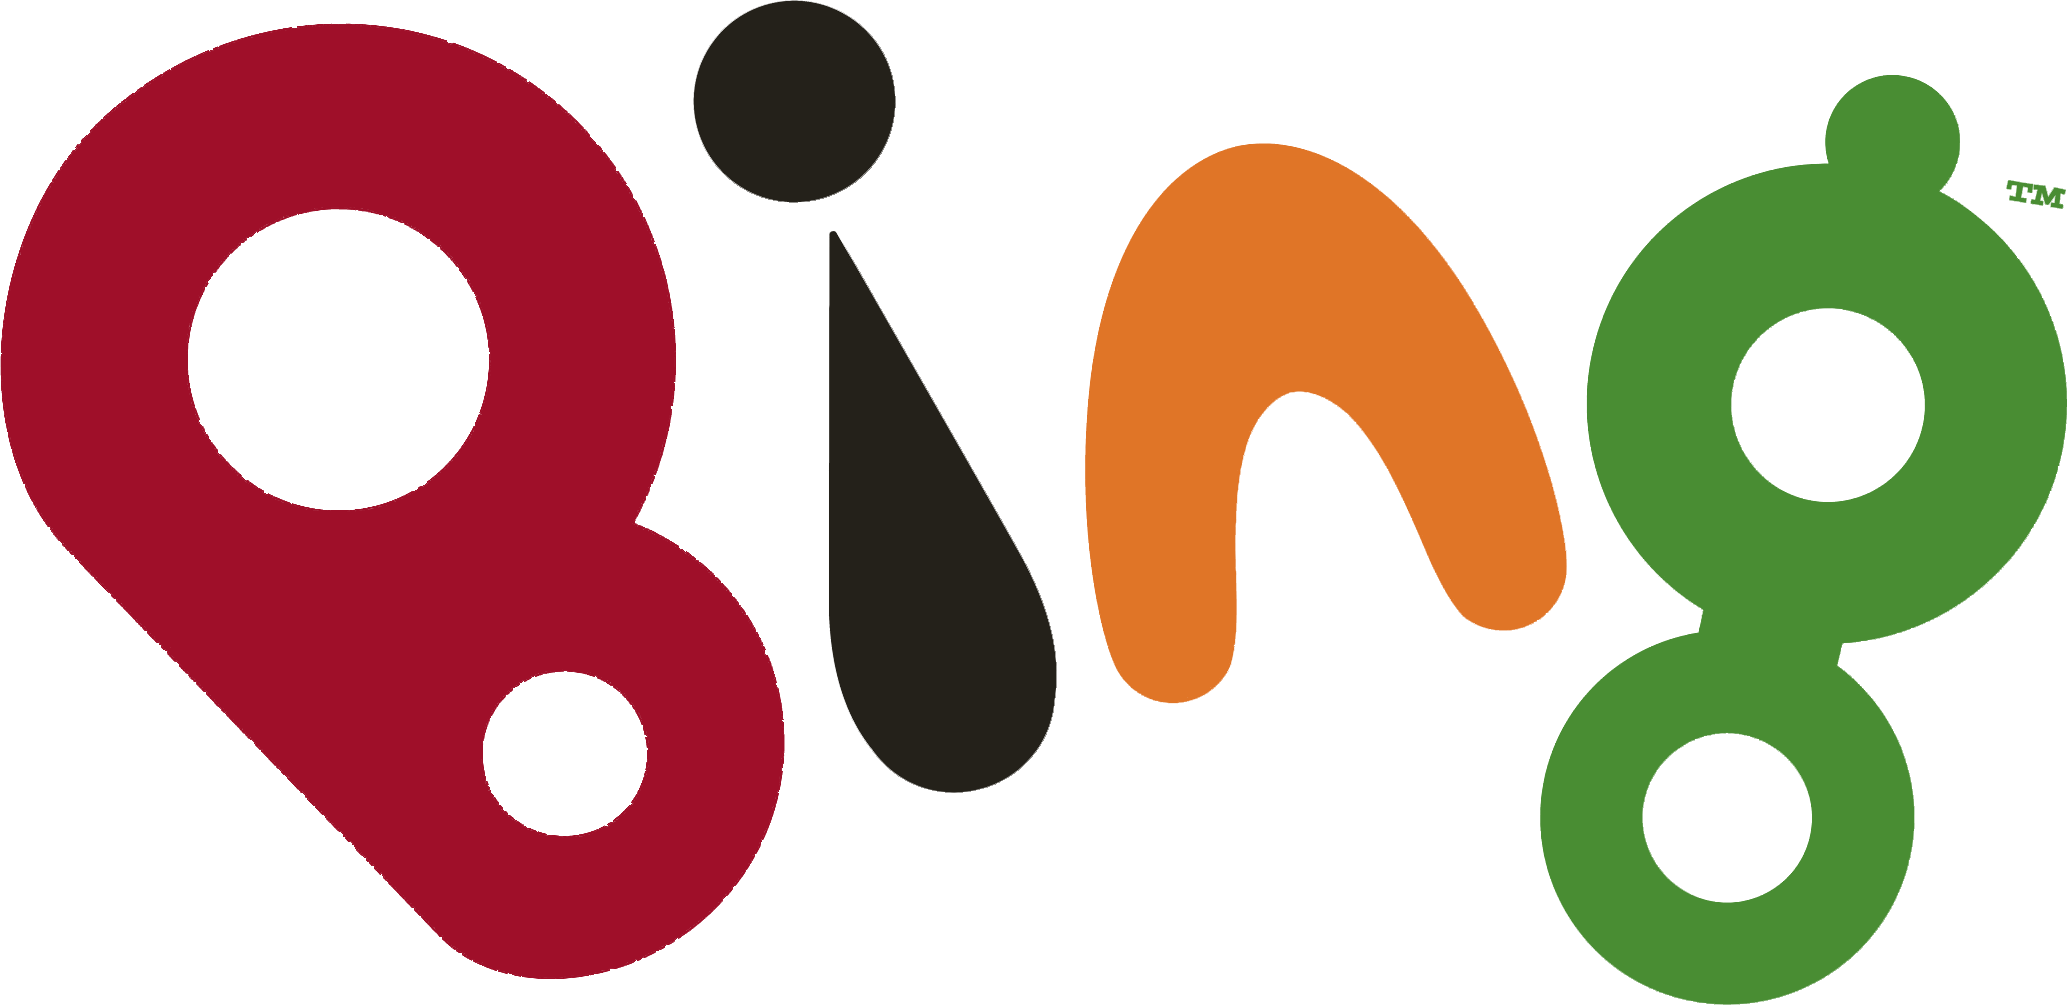 Go bing. Логотип бинг. Bing Поисковик. Логотипы мультиков. Логотип поисковой системы бинг.